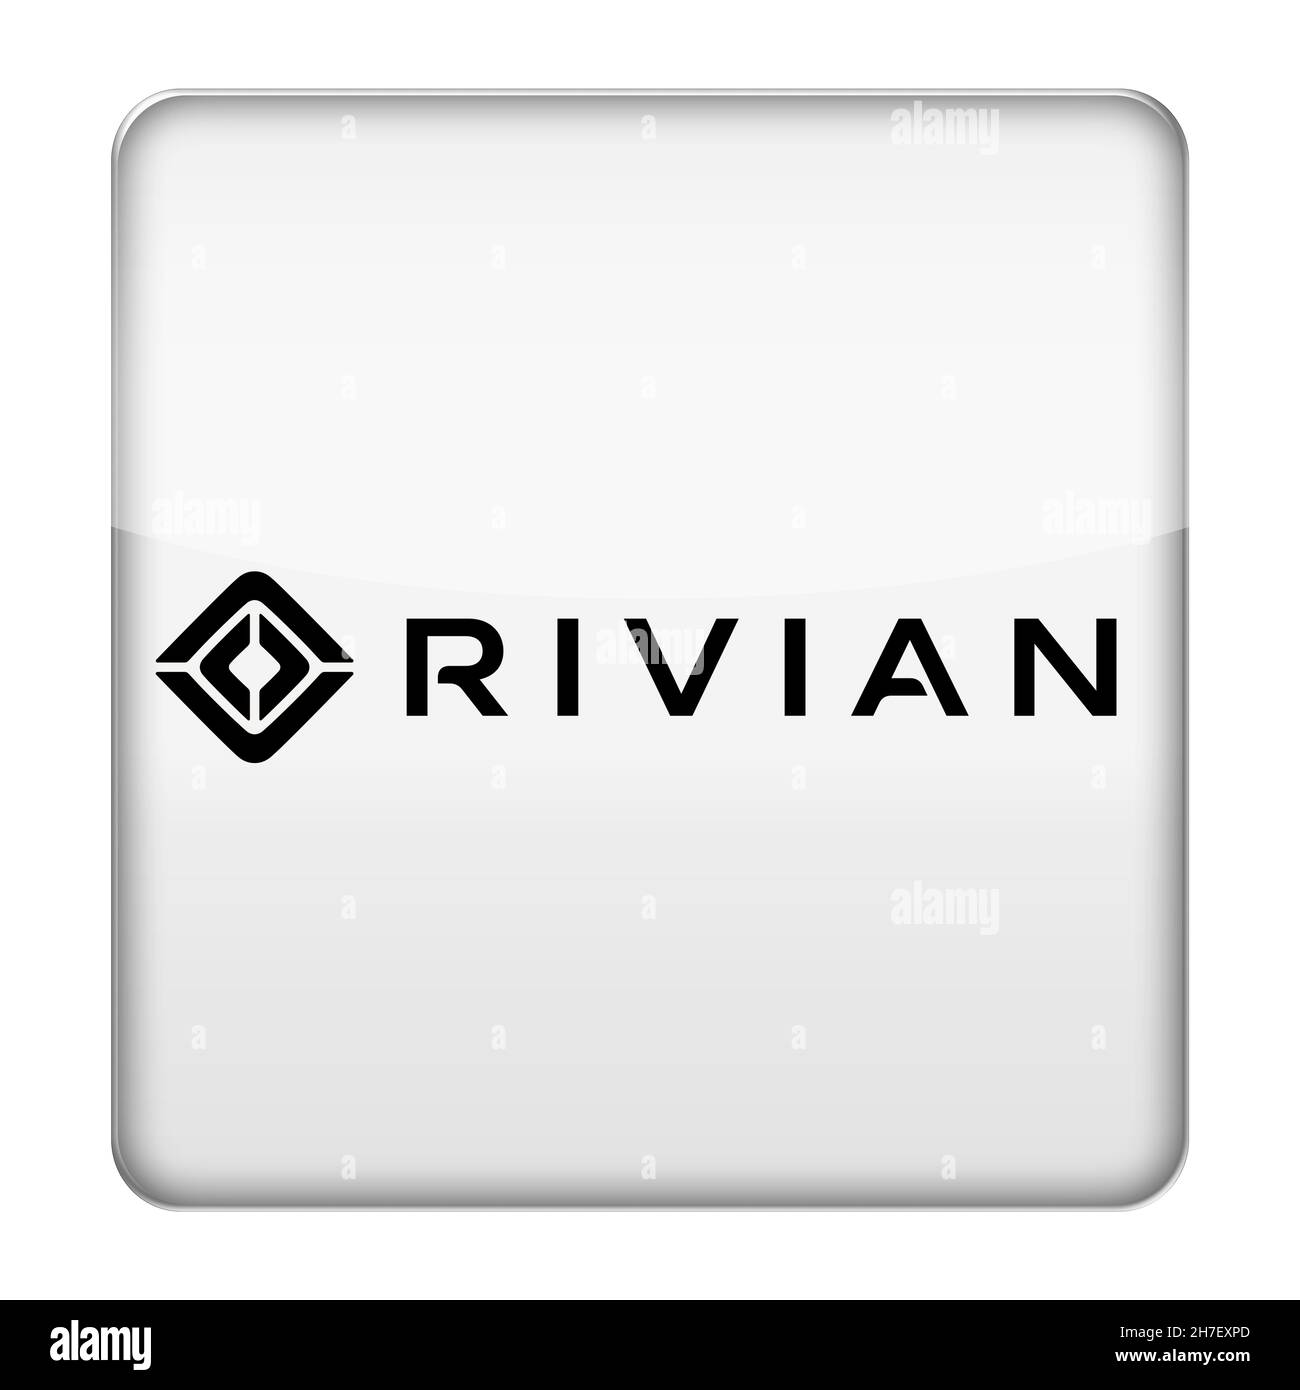 Rivian logo Stock Photo